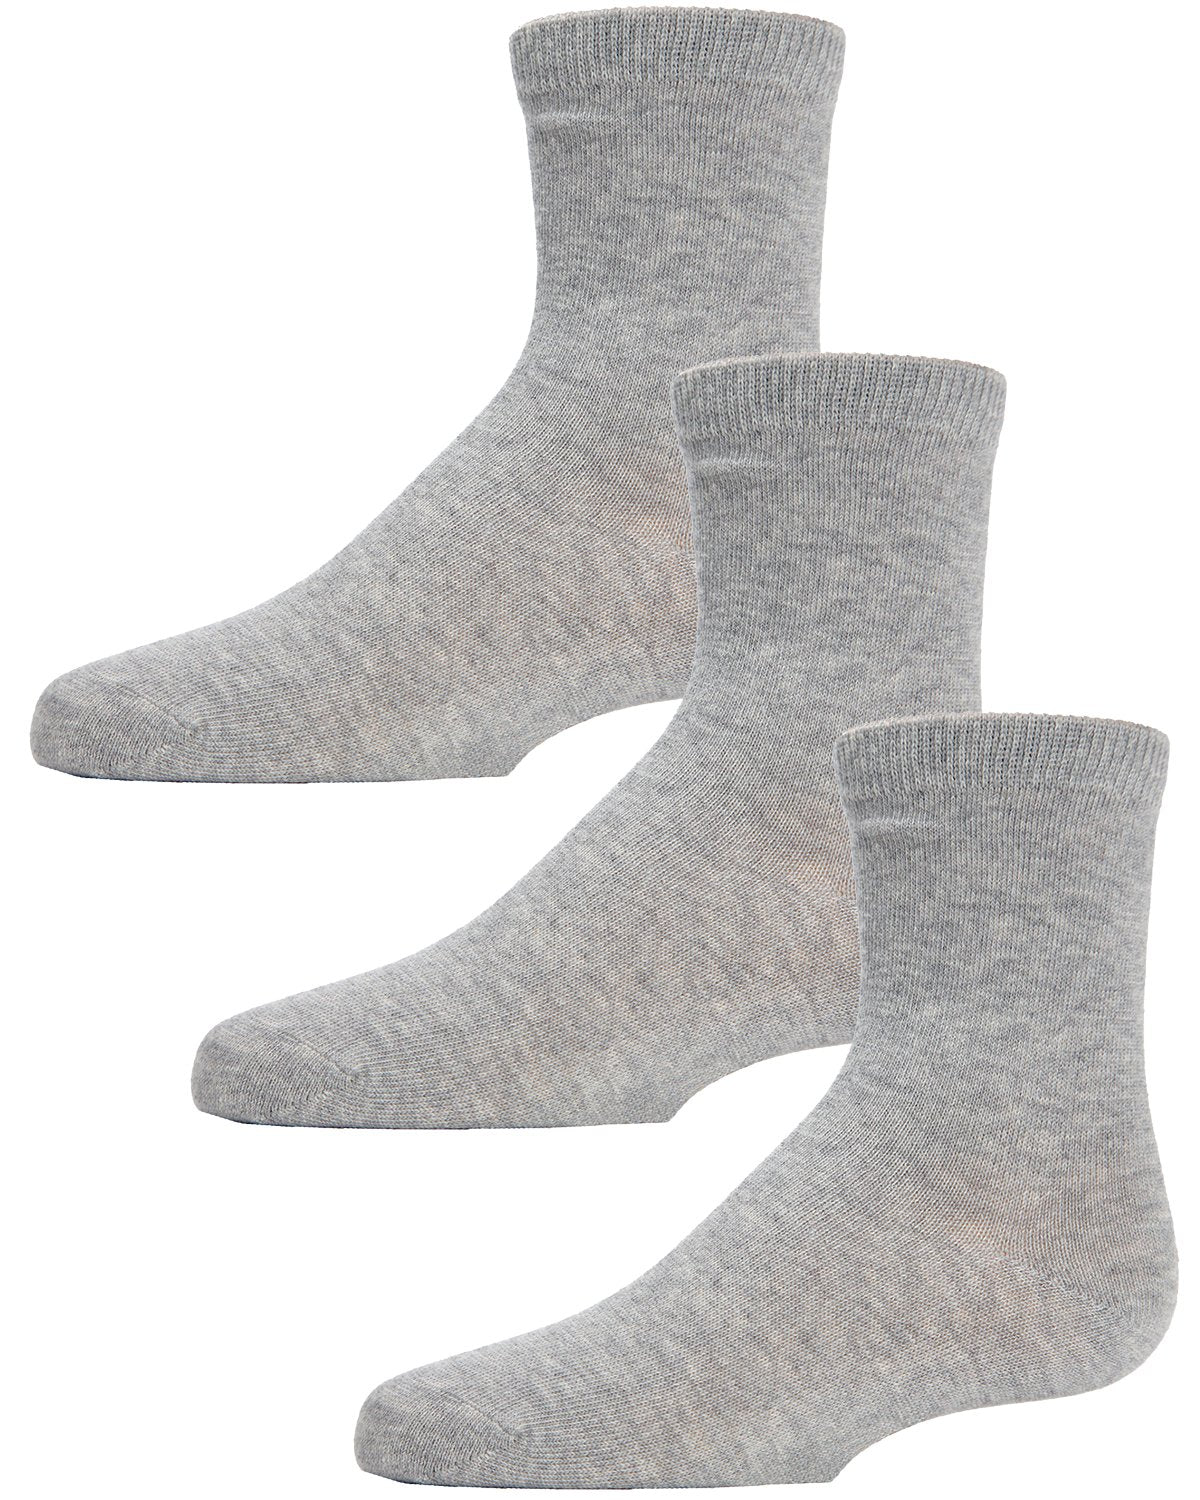 Unisex Cotton Blend Mid-Cut Socks 3-Pack